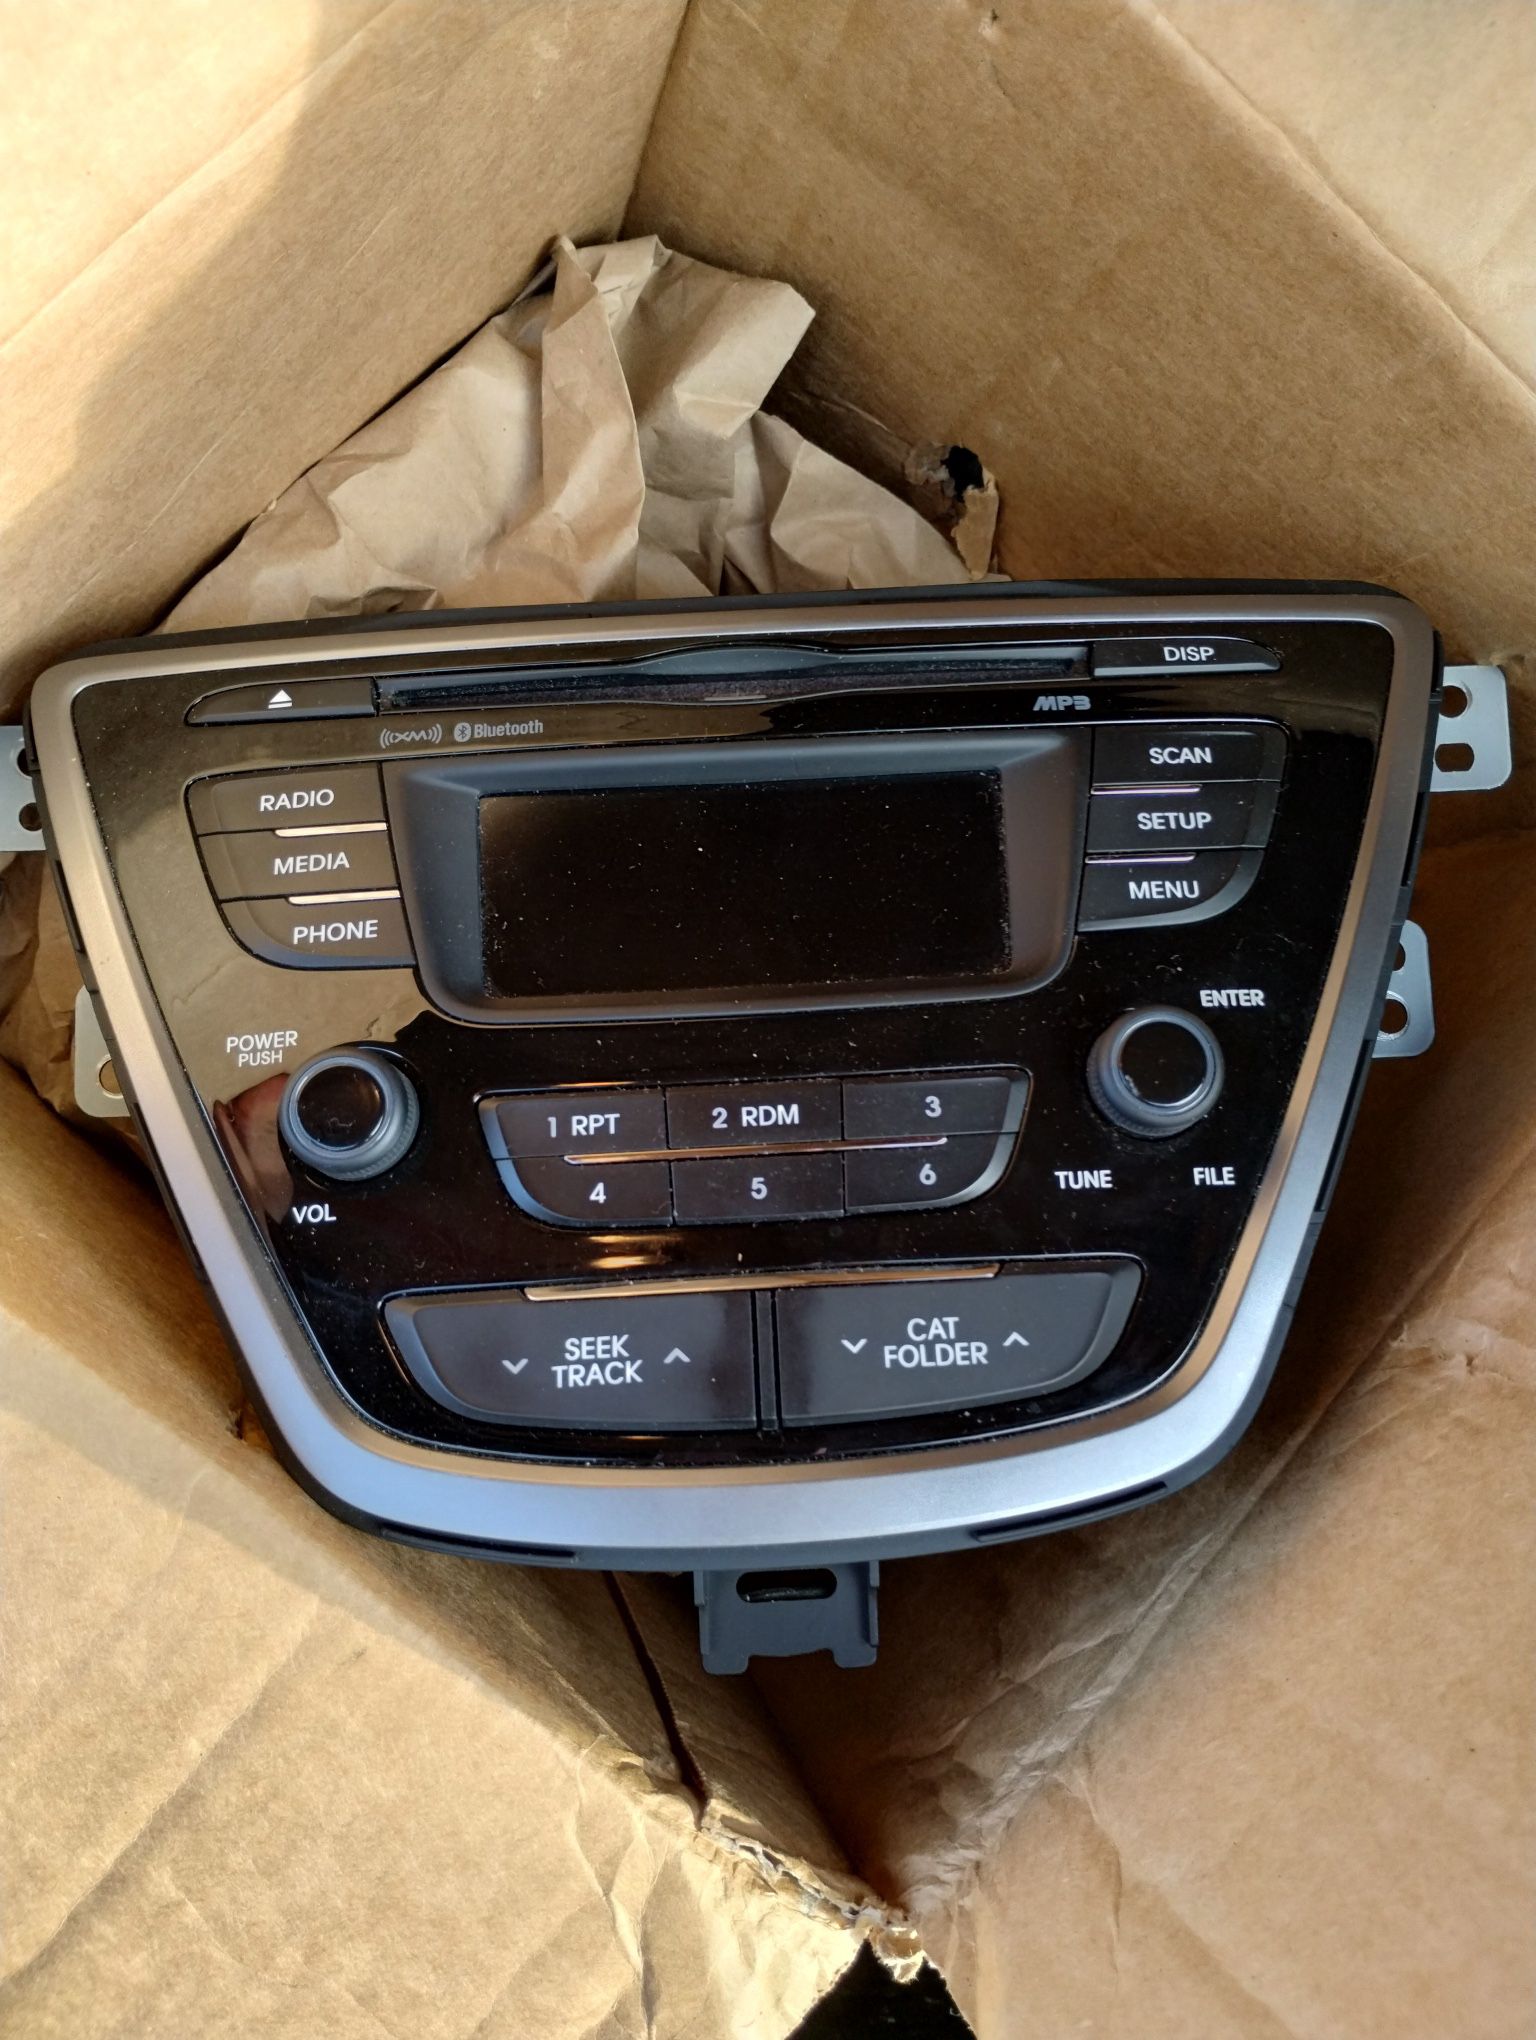 2015 Hyundai Elantra Radio/CD player new $35 pick up only